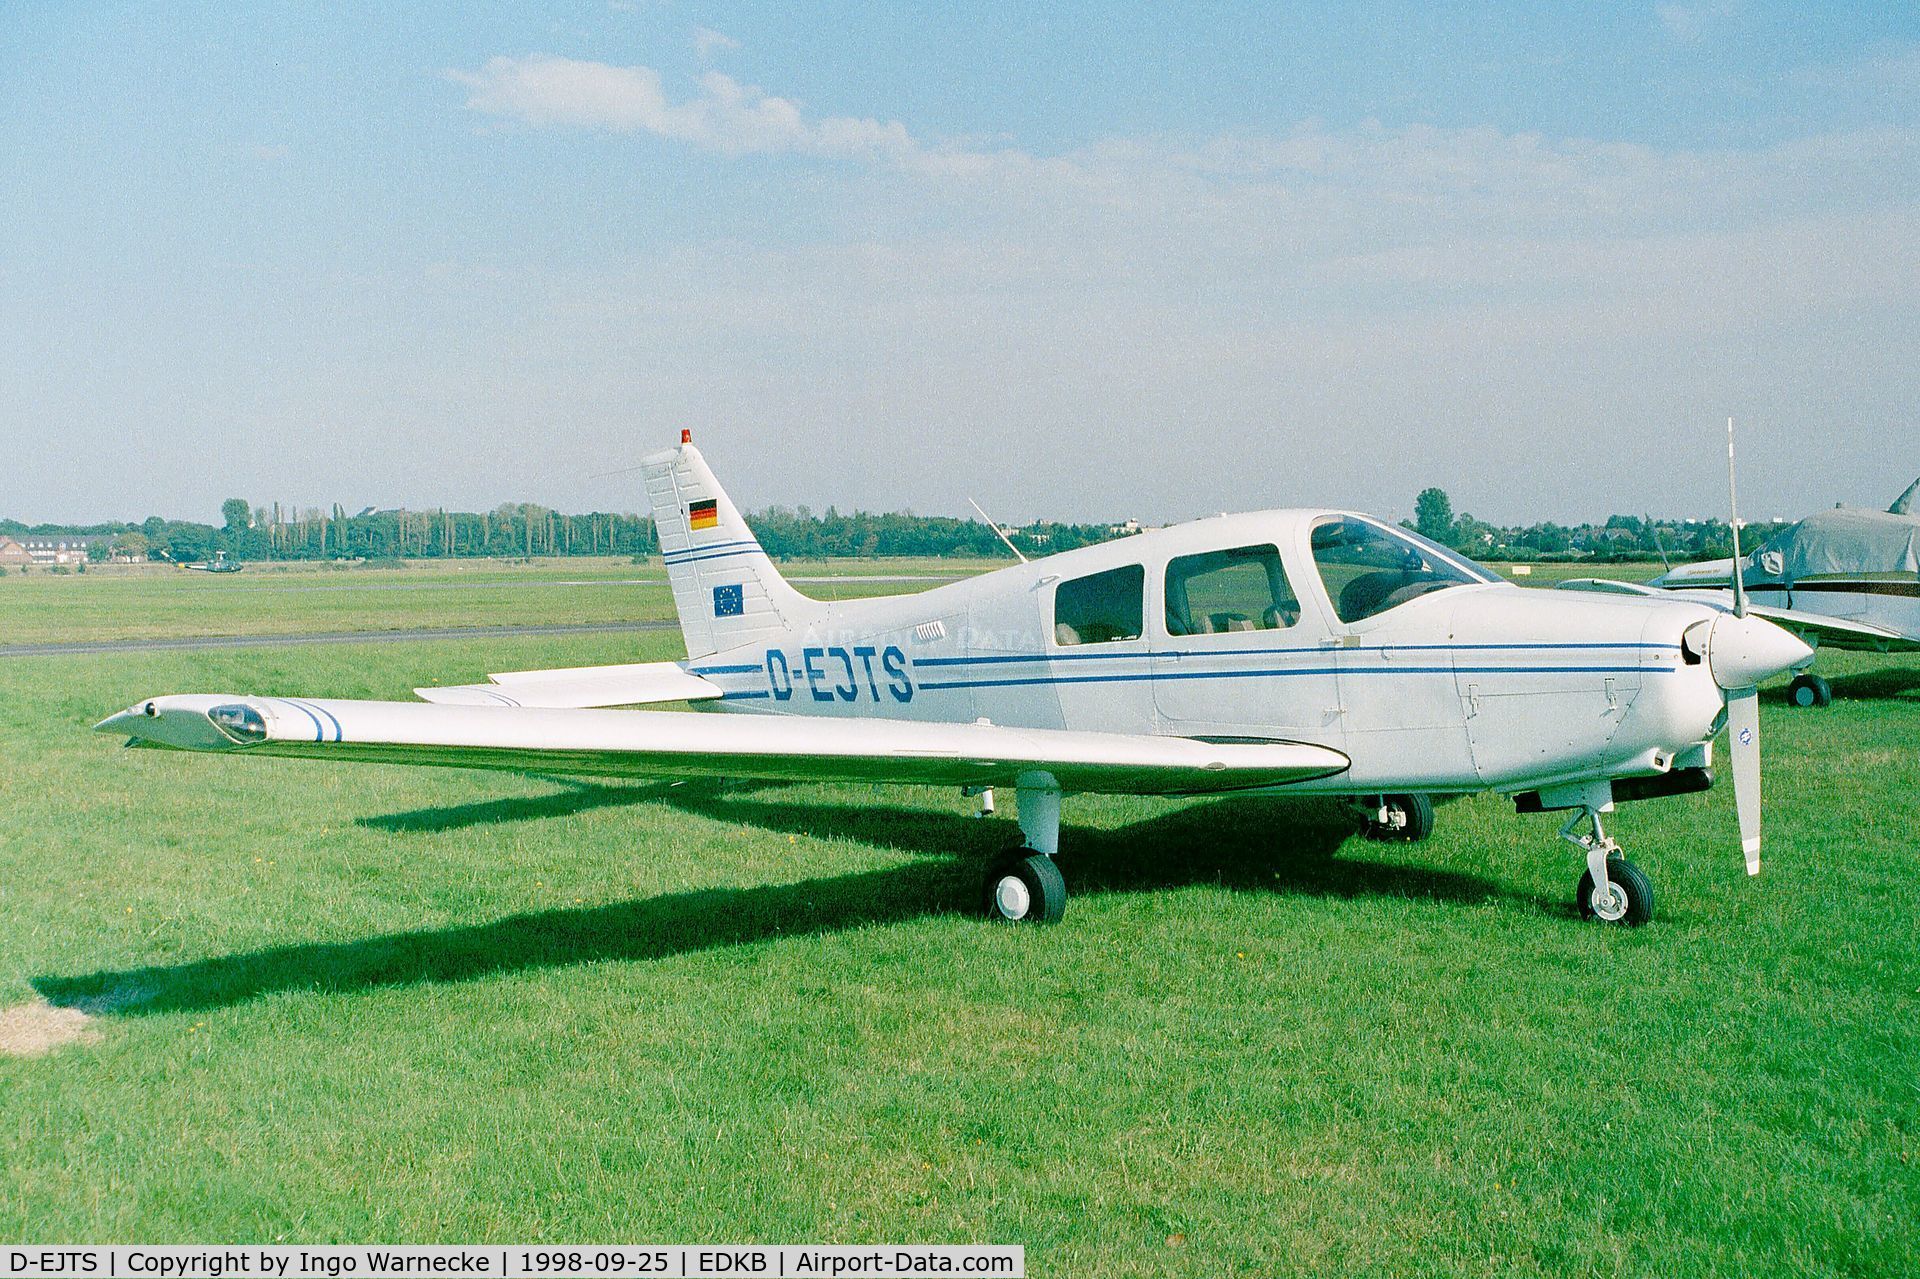 D-EJTS, 1989 Piper PA-28-161 C/N 2841314, Piper PA-28-161 Cadet at Bonn-Hangelar airfield